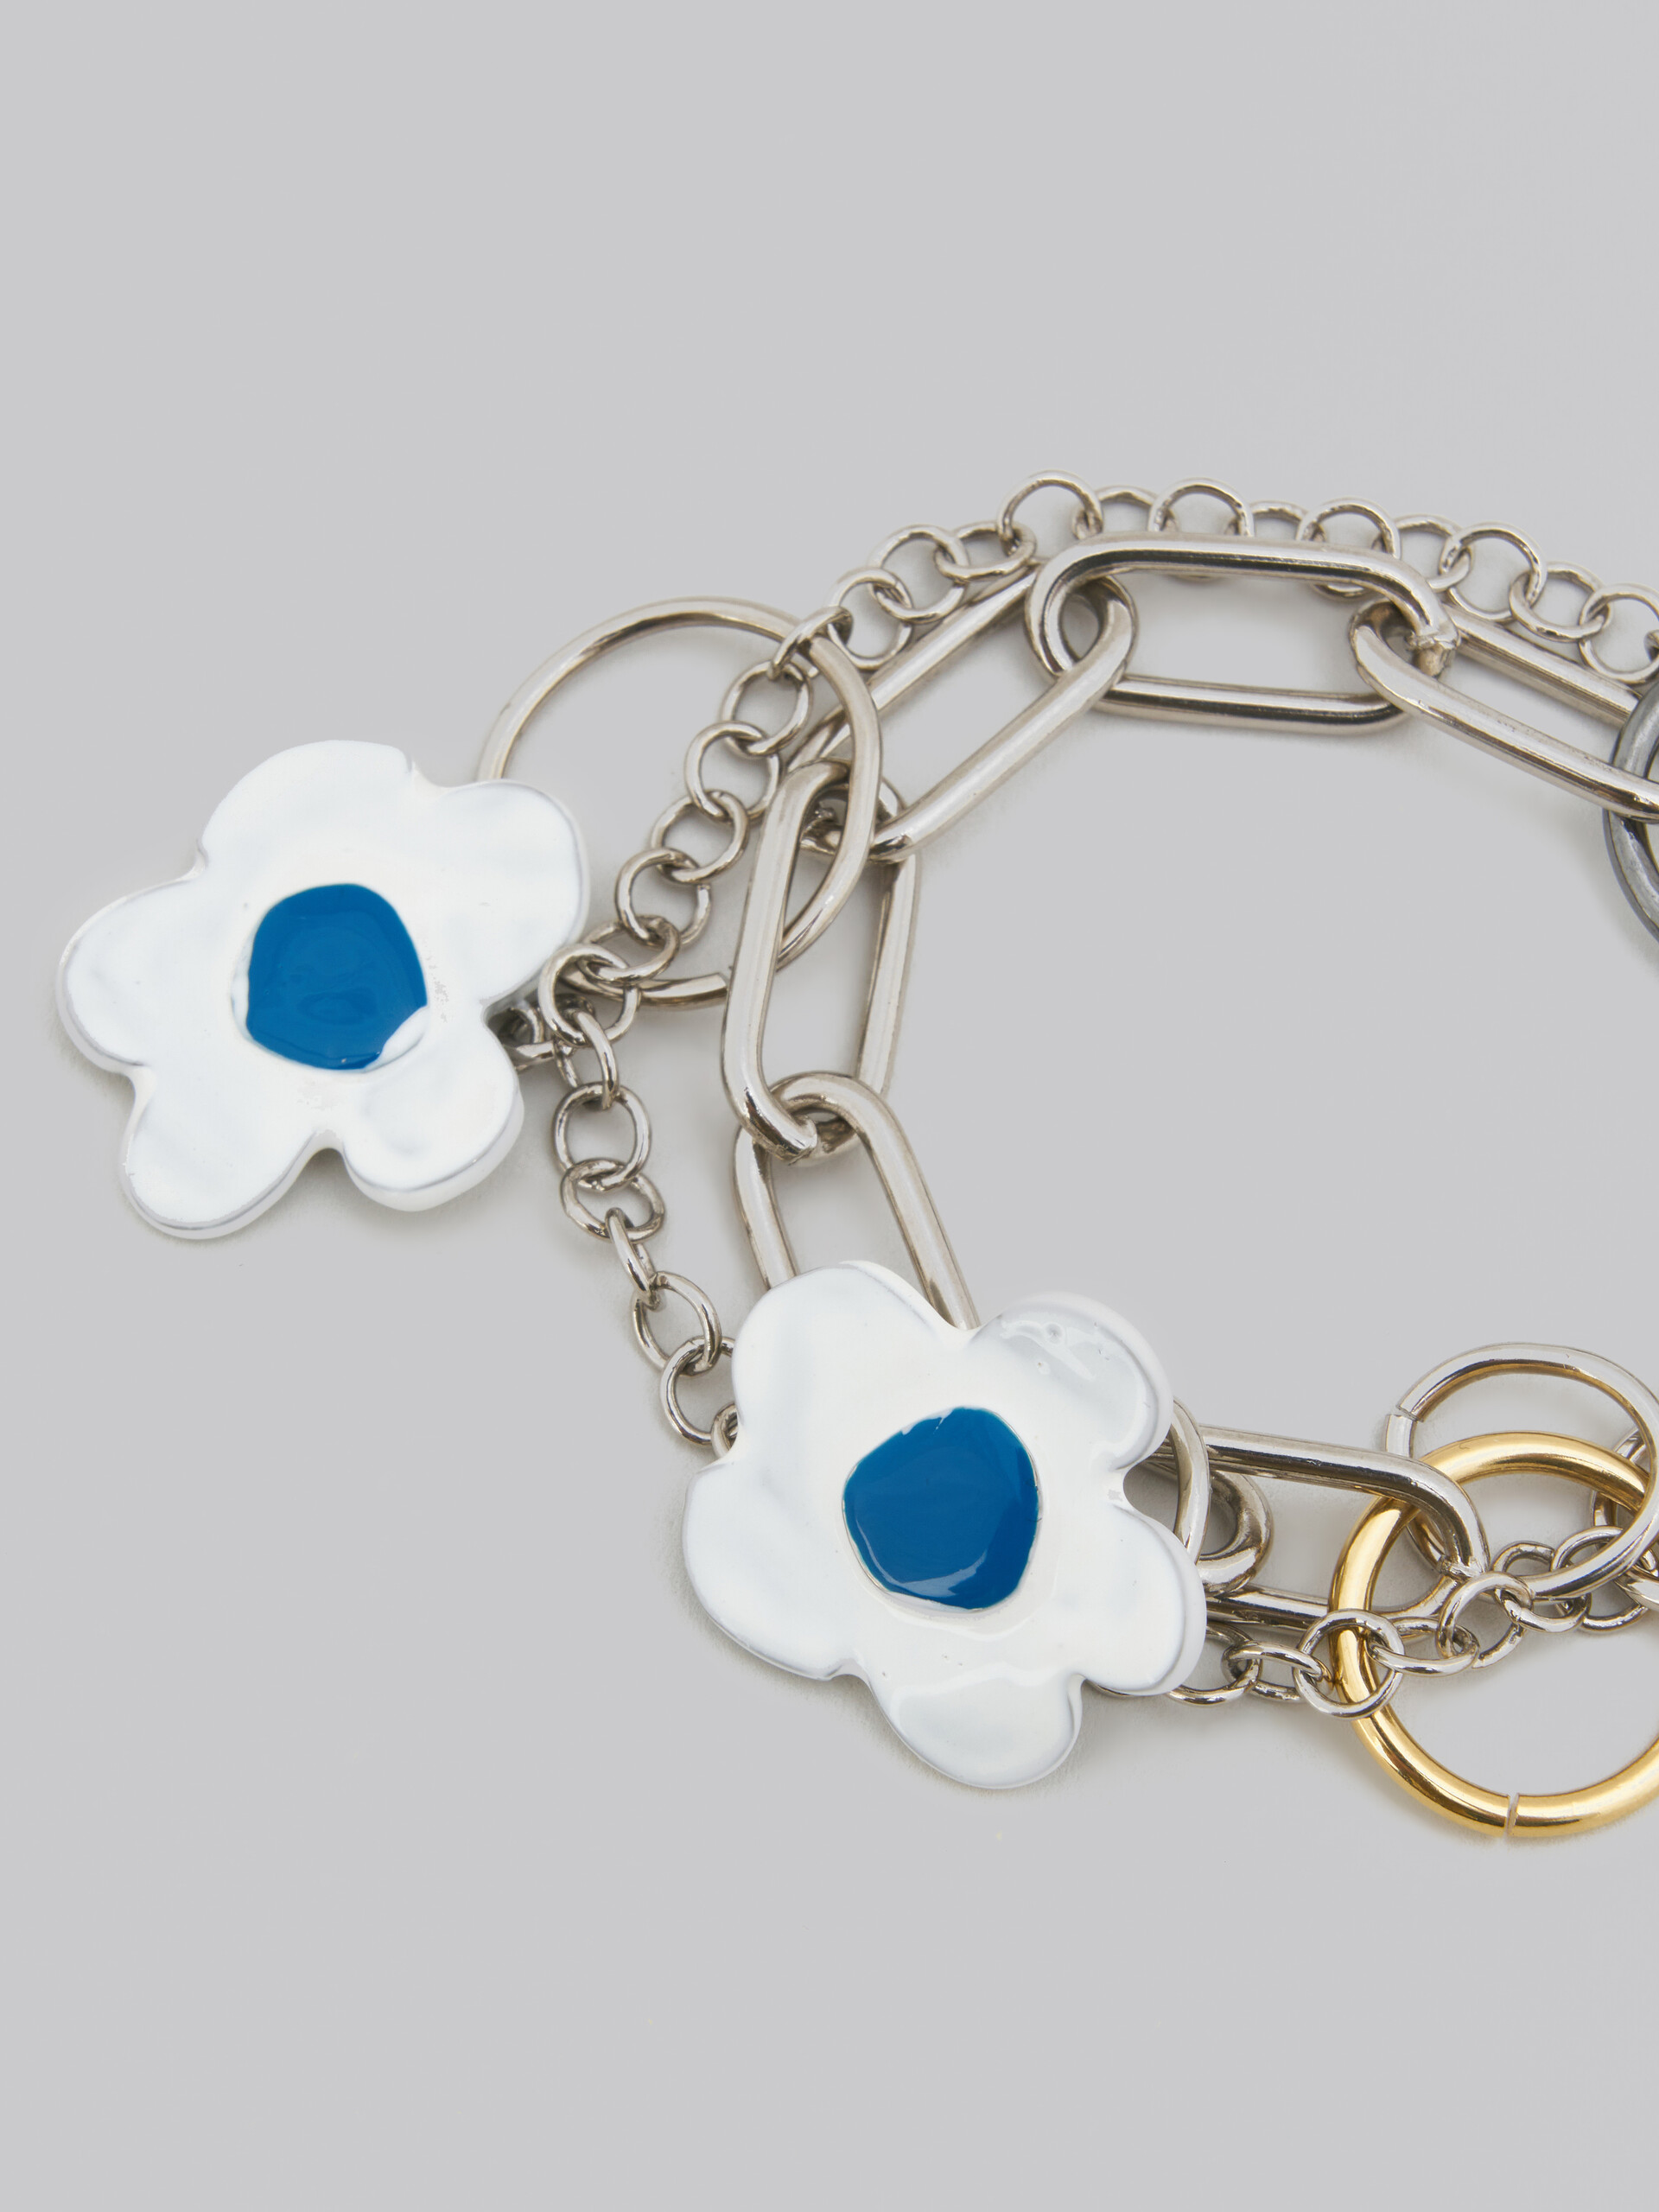 Bracelet with white flowers - Bracelets - Image 4